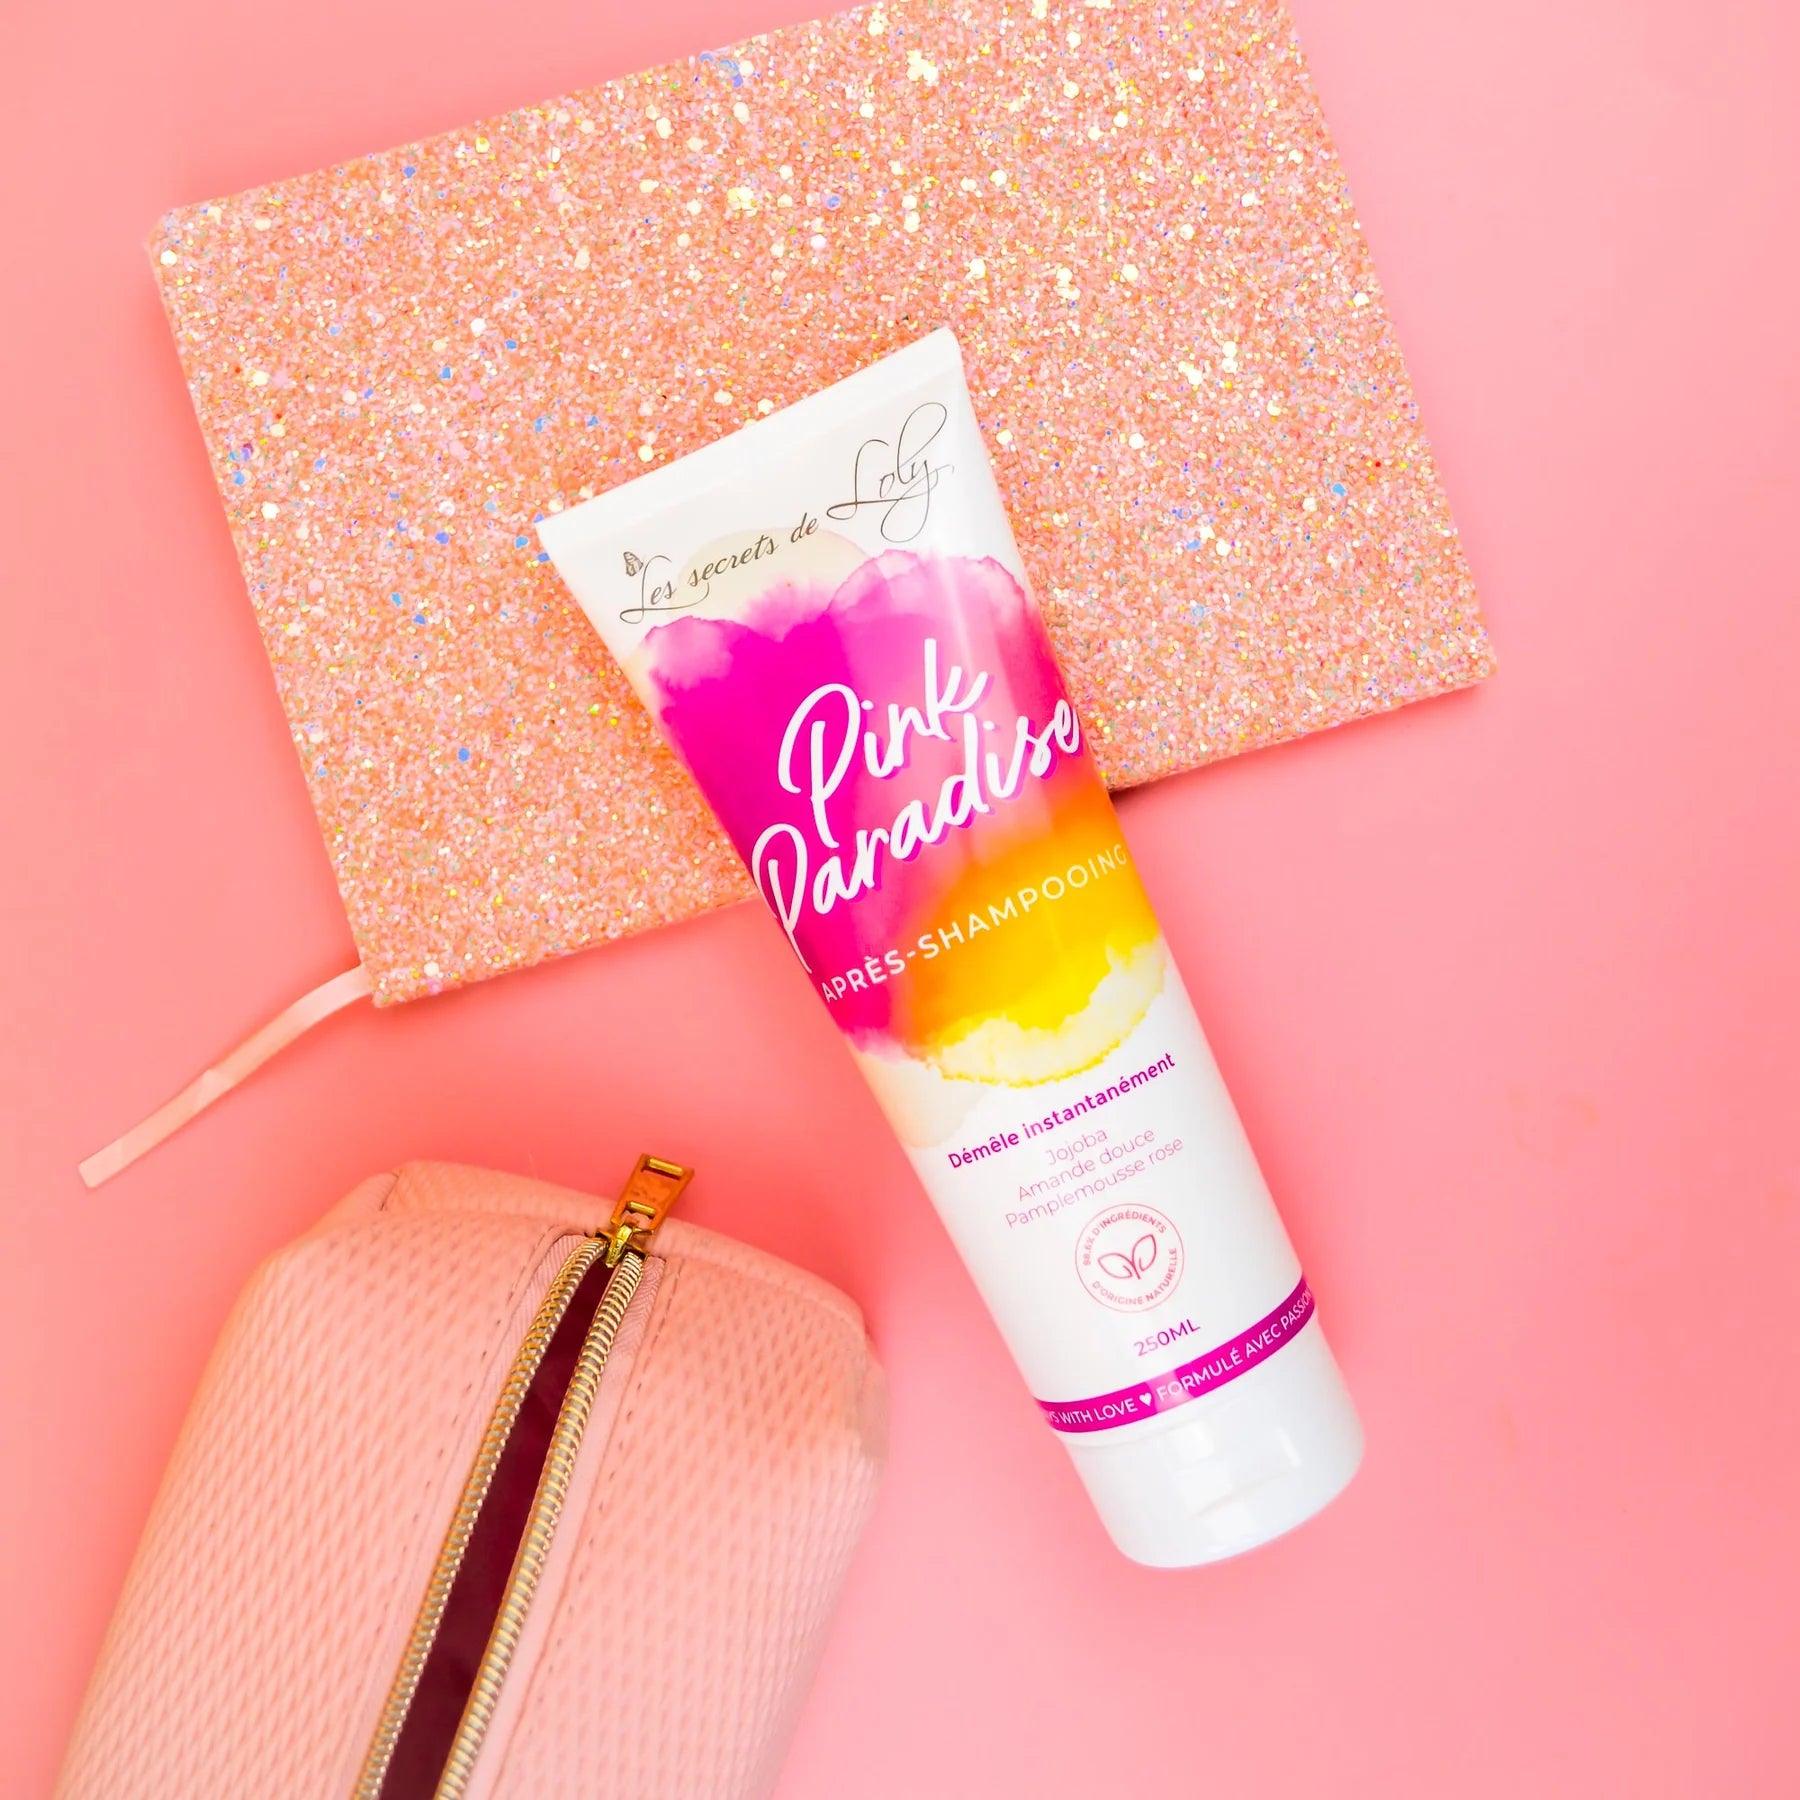 Pink Paradise Les Secrets de Loly après shampoing 100mL - BASYKA BOX